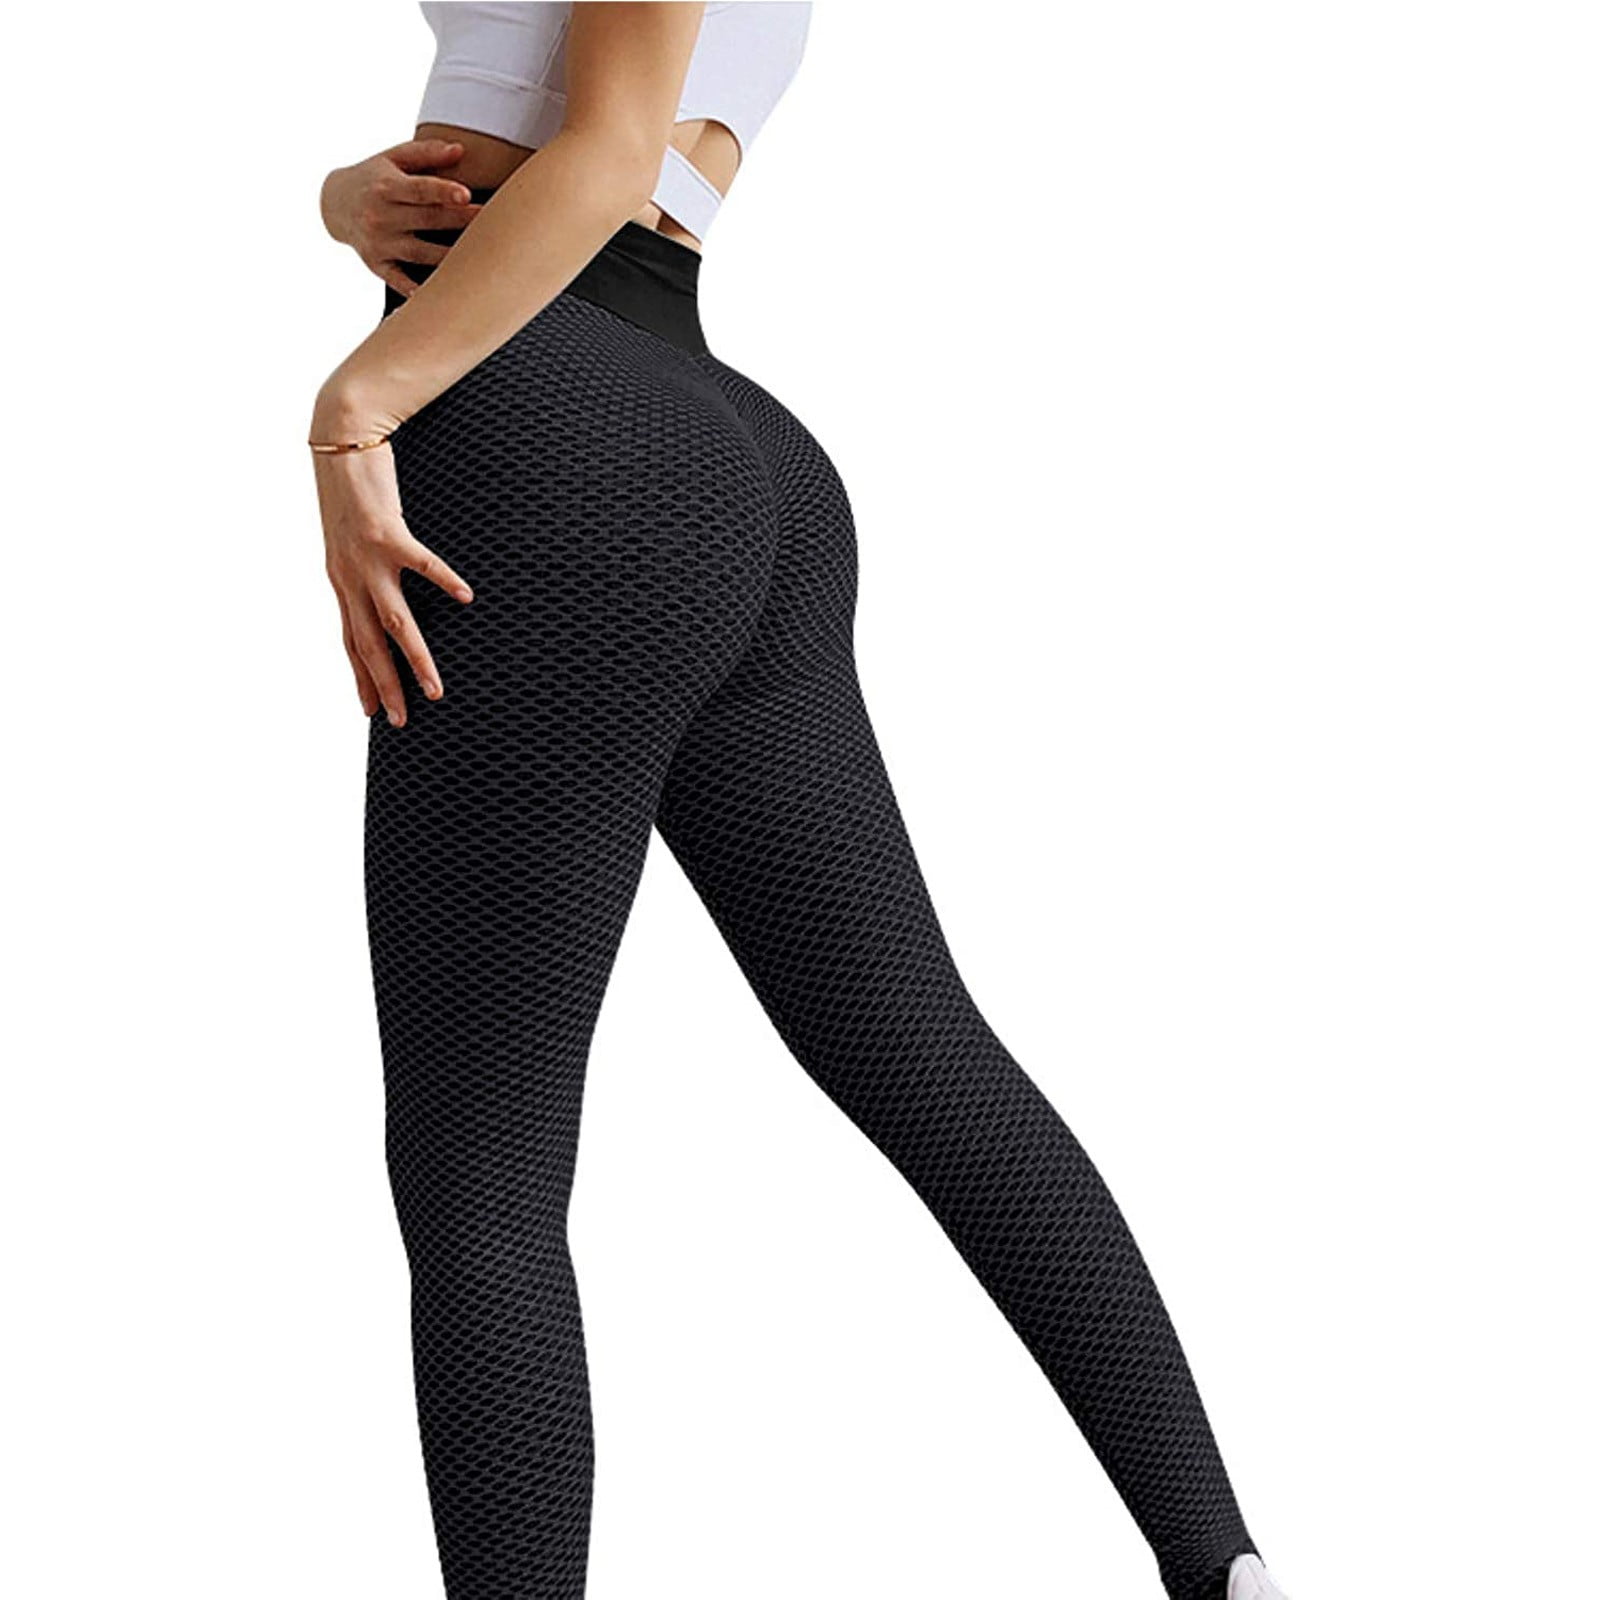 Aayomet Yoga Pants For Women Bootcut Women's Bootcut Yoga Pants with Pockets,  High Waist Workout Bootleg Yoga Pants Tummy Control 11 Way Stretch Pants, Black XXL 